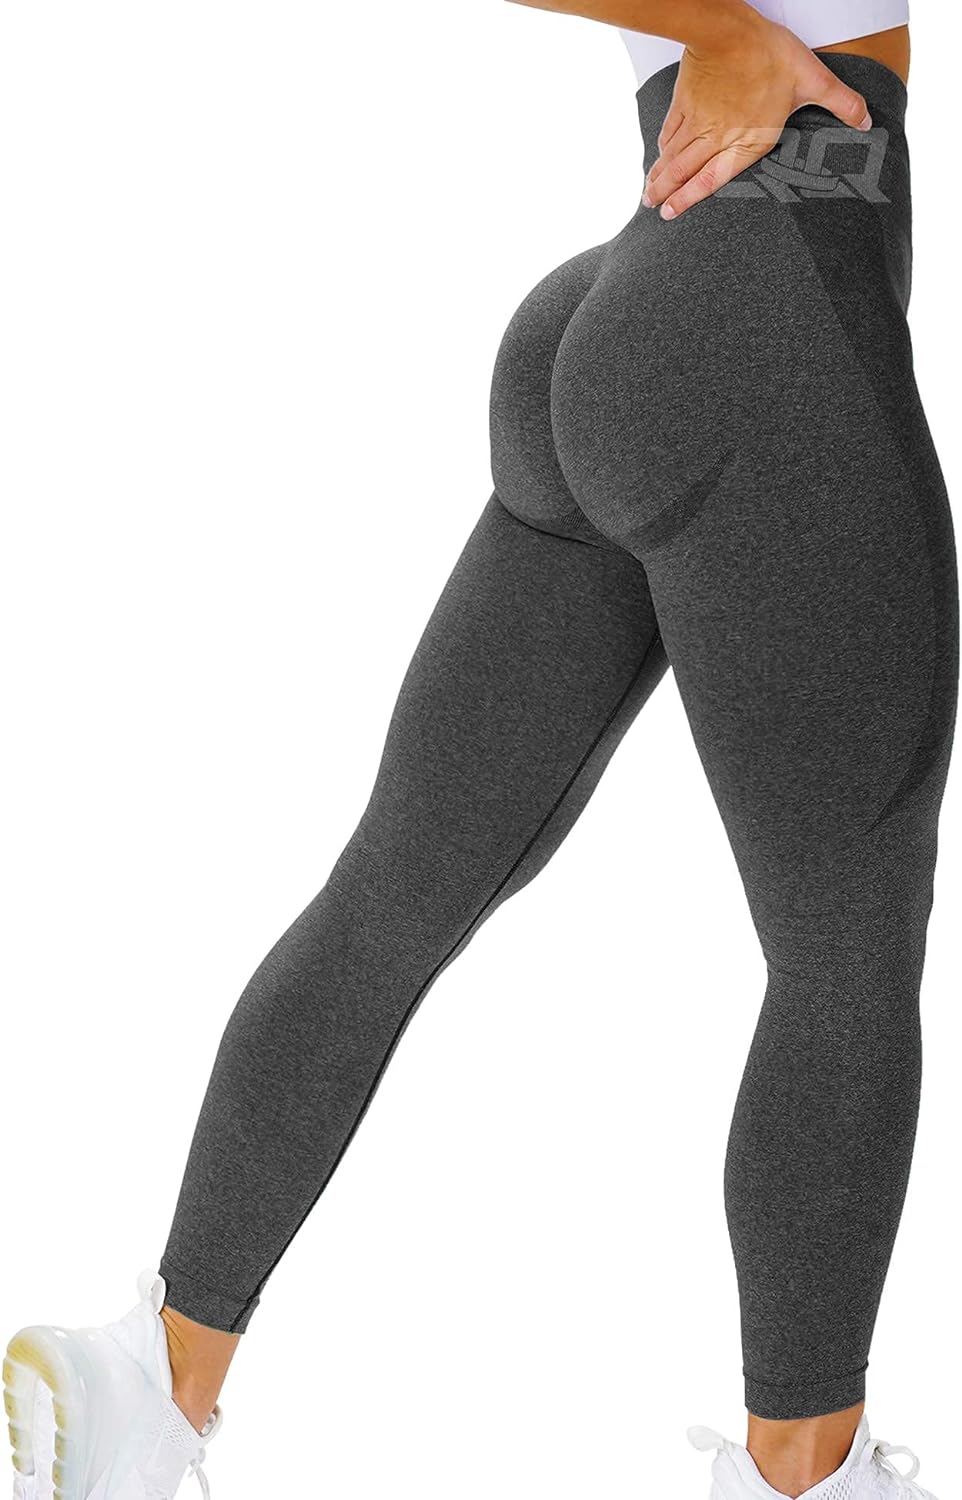 Womens Seamless Workout Leggings High Waist Yoga Gym Pants Butt Lift Tummy Control Tights Athletic Leggings 